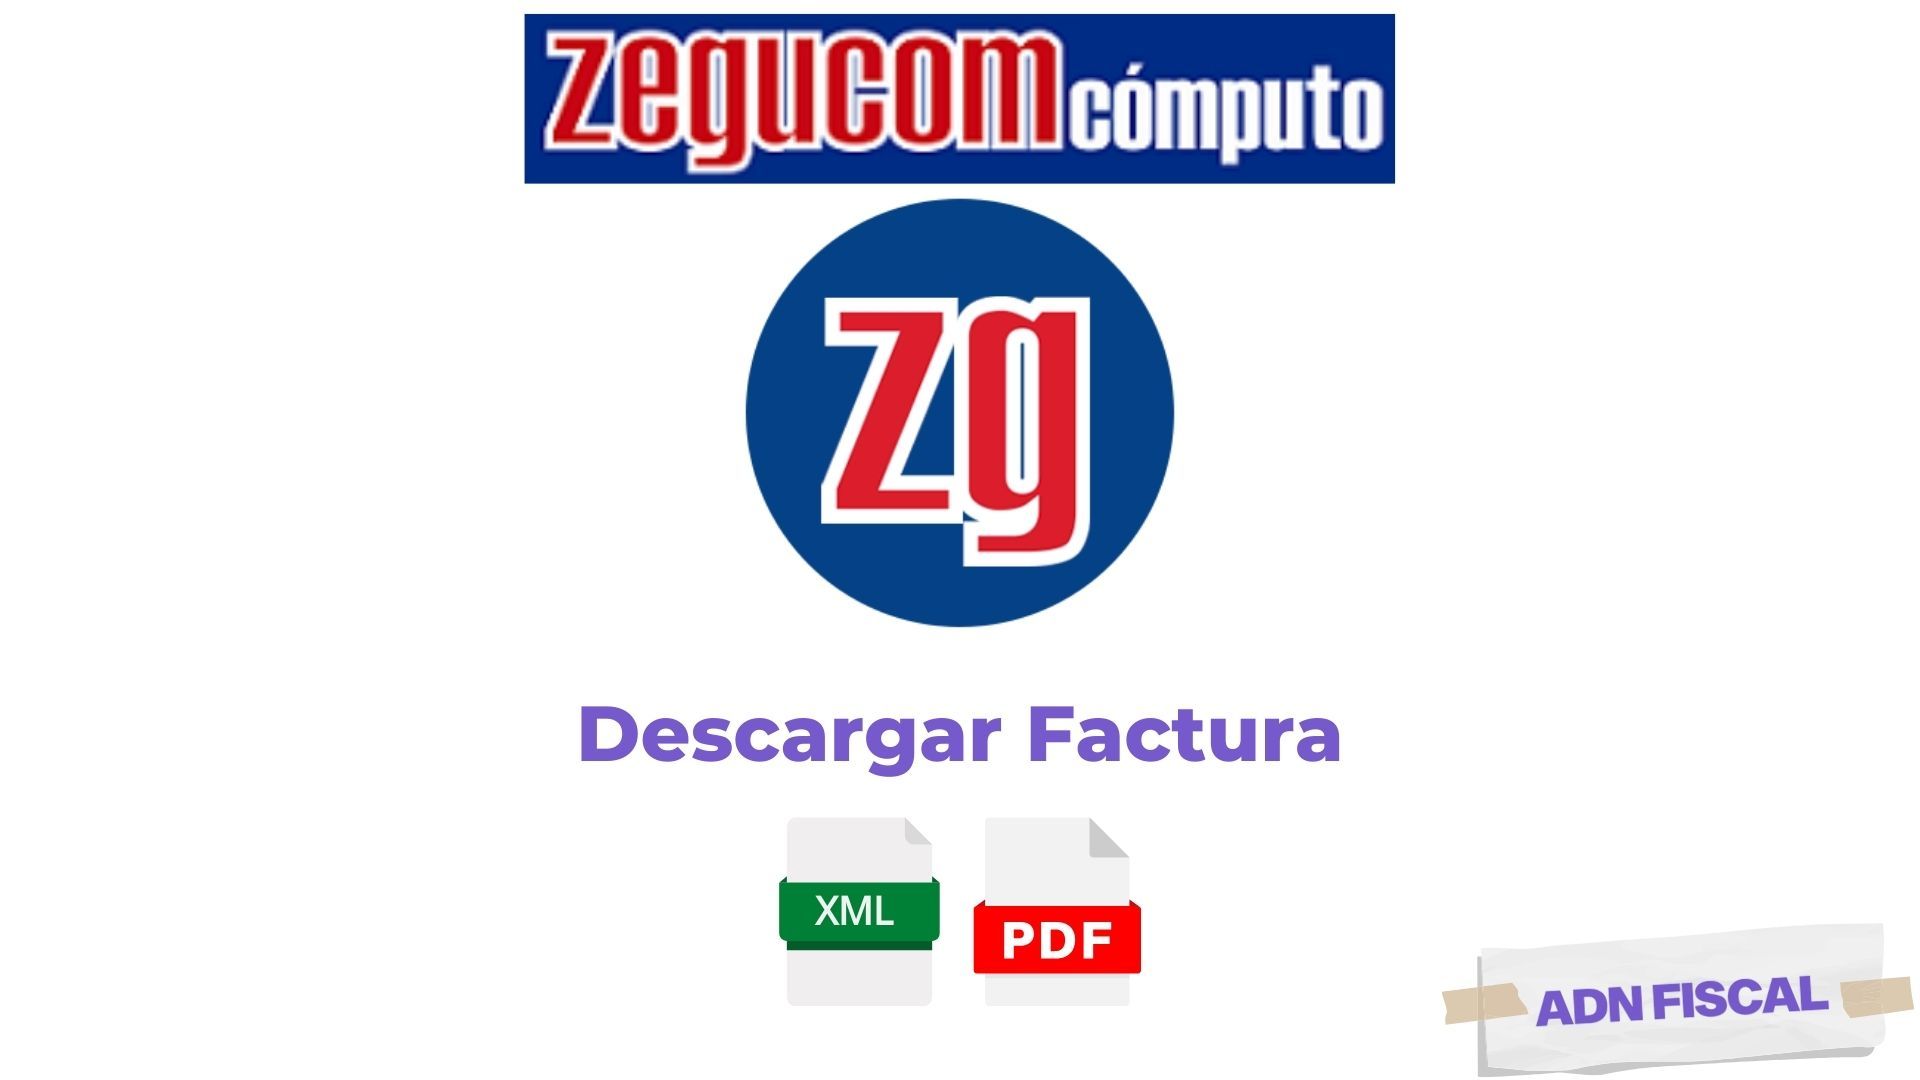 Facturacion Zegucom Facturacion ADN Fiscal